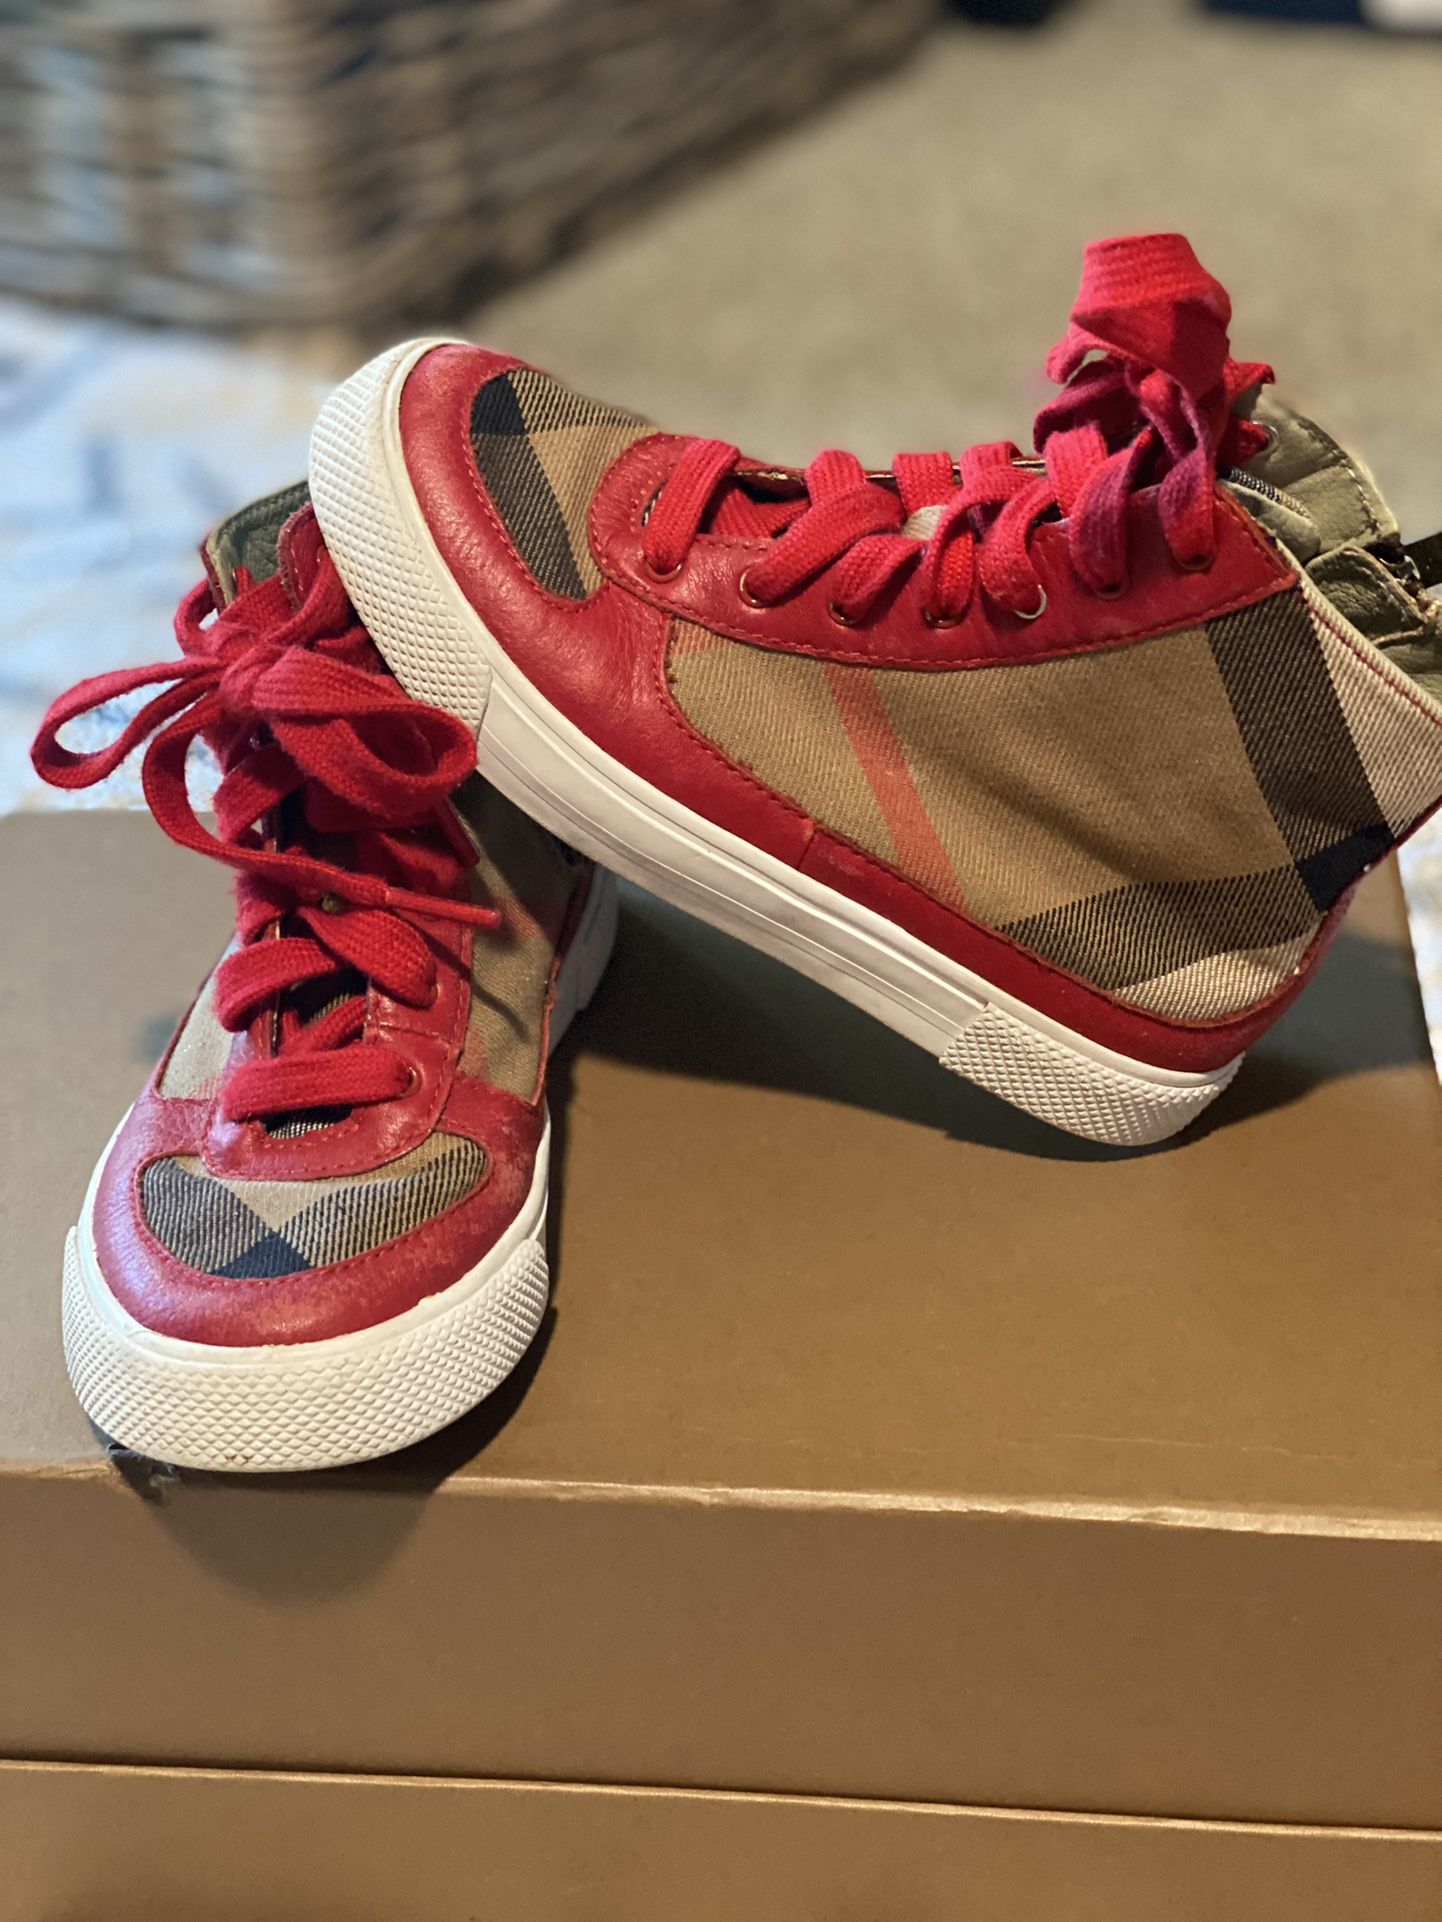 Burberry Kids Sneakers Size 11.5c - Kids